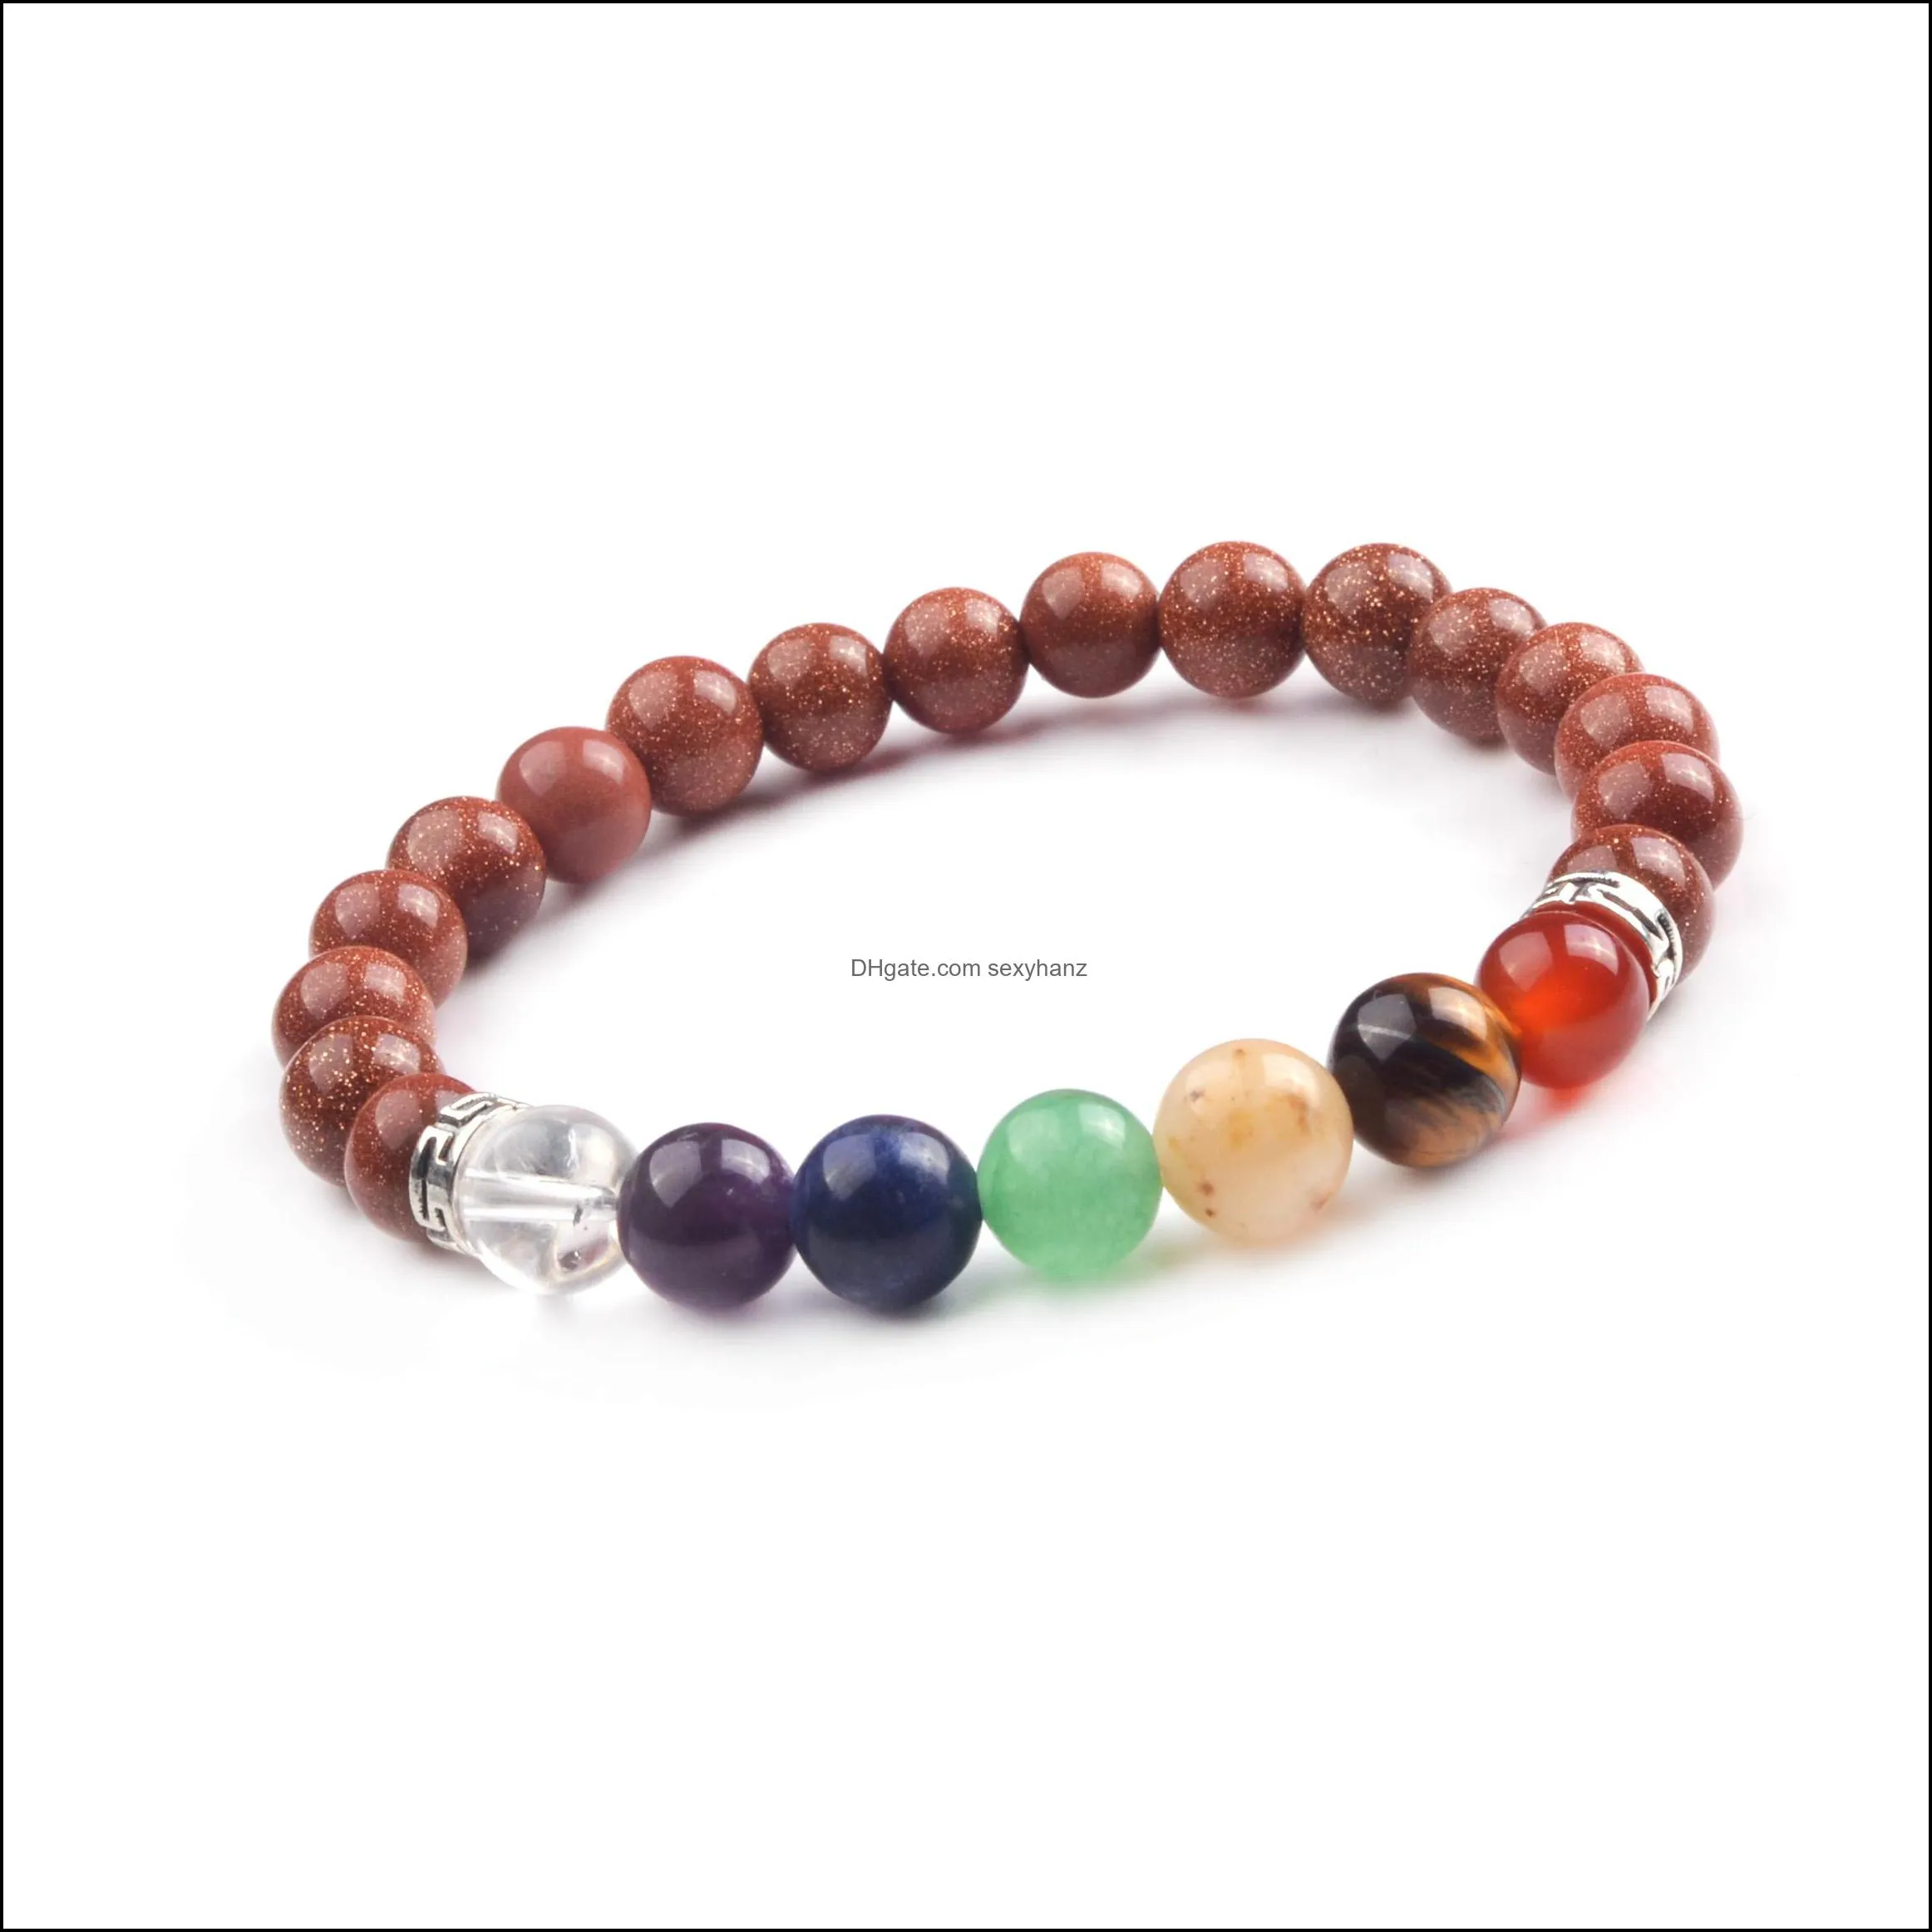 Seven Chakra Bead Bracelets - 8mm Natural Lava Stone Bead Bracelet, Men`s Stress Relief Yoga Beads Aromatherapy Essential Oil Disperser